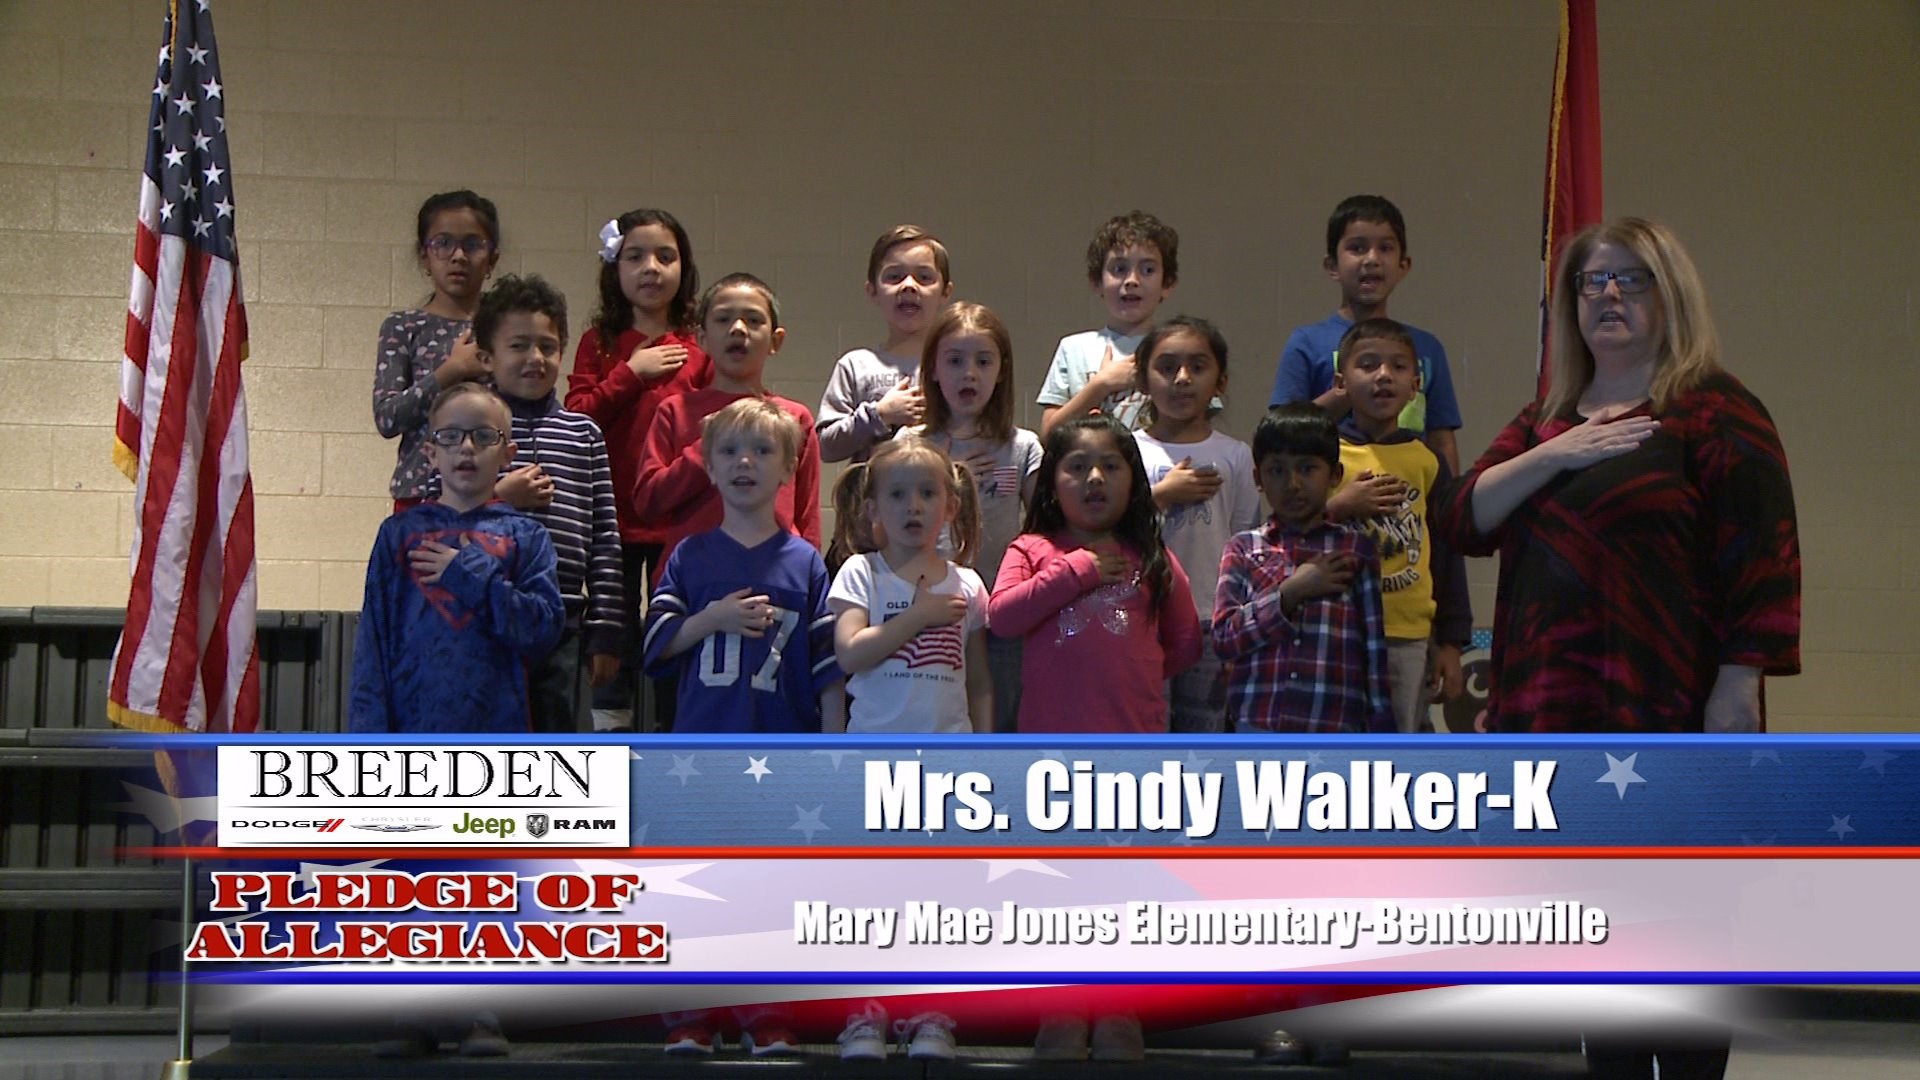 Mrs. Cindy Walker  K  Mary Mae Jones Elementary  Bentonville